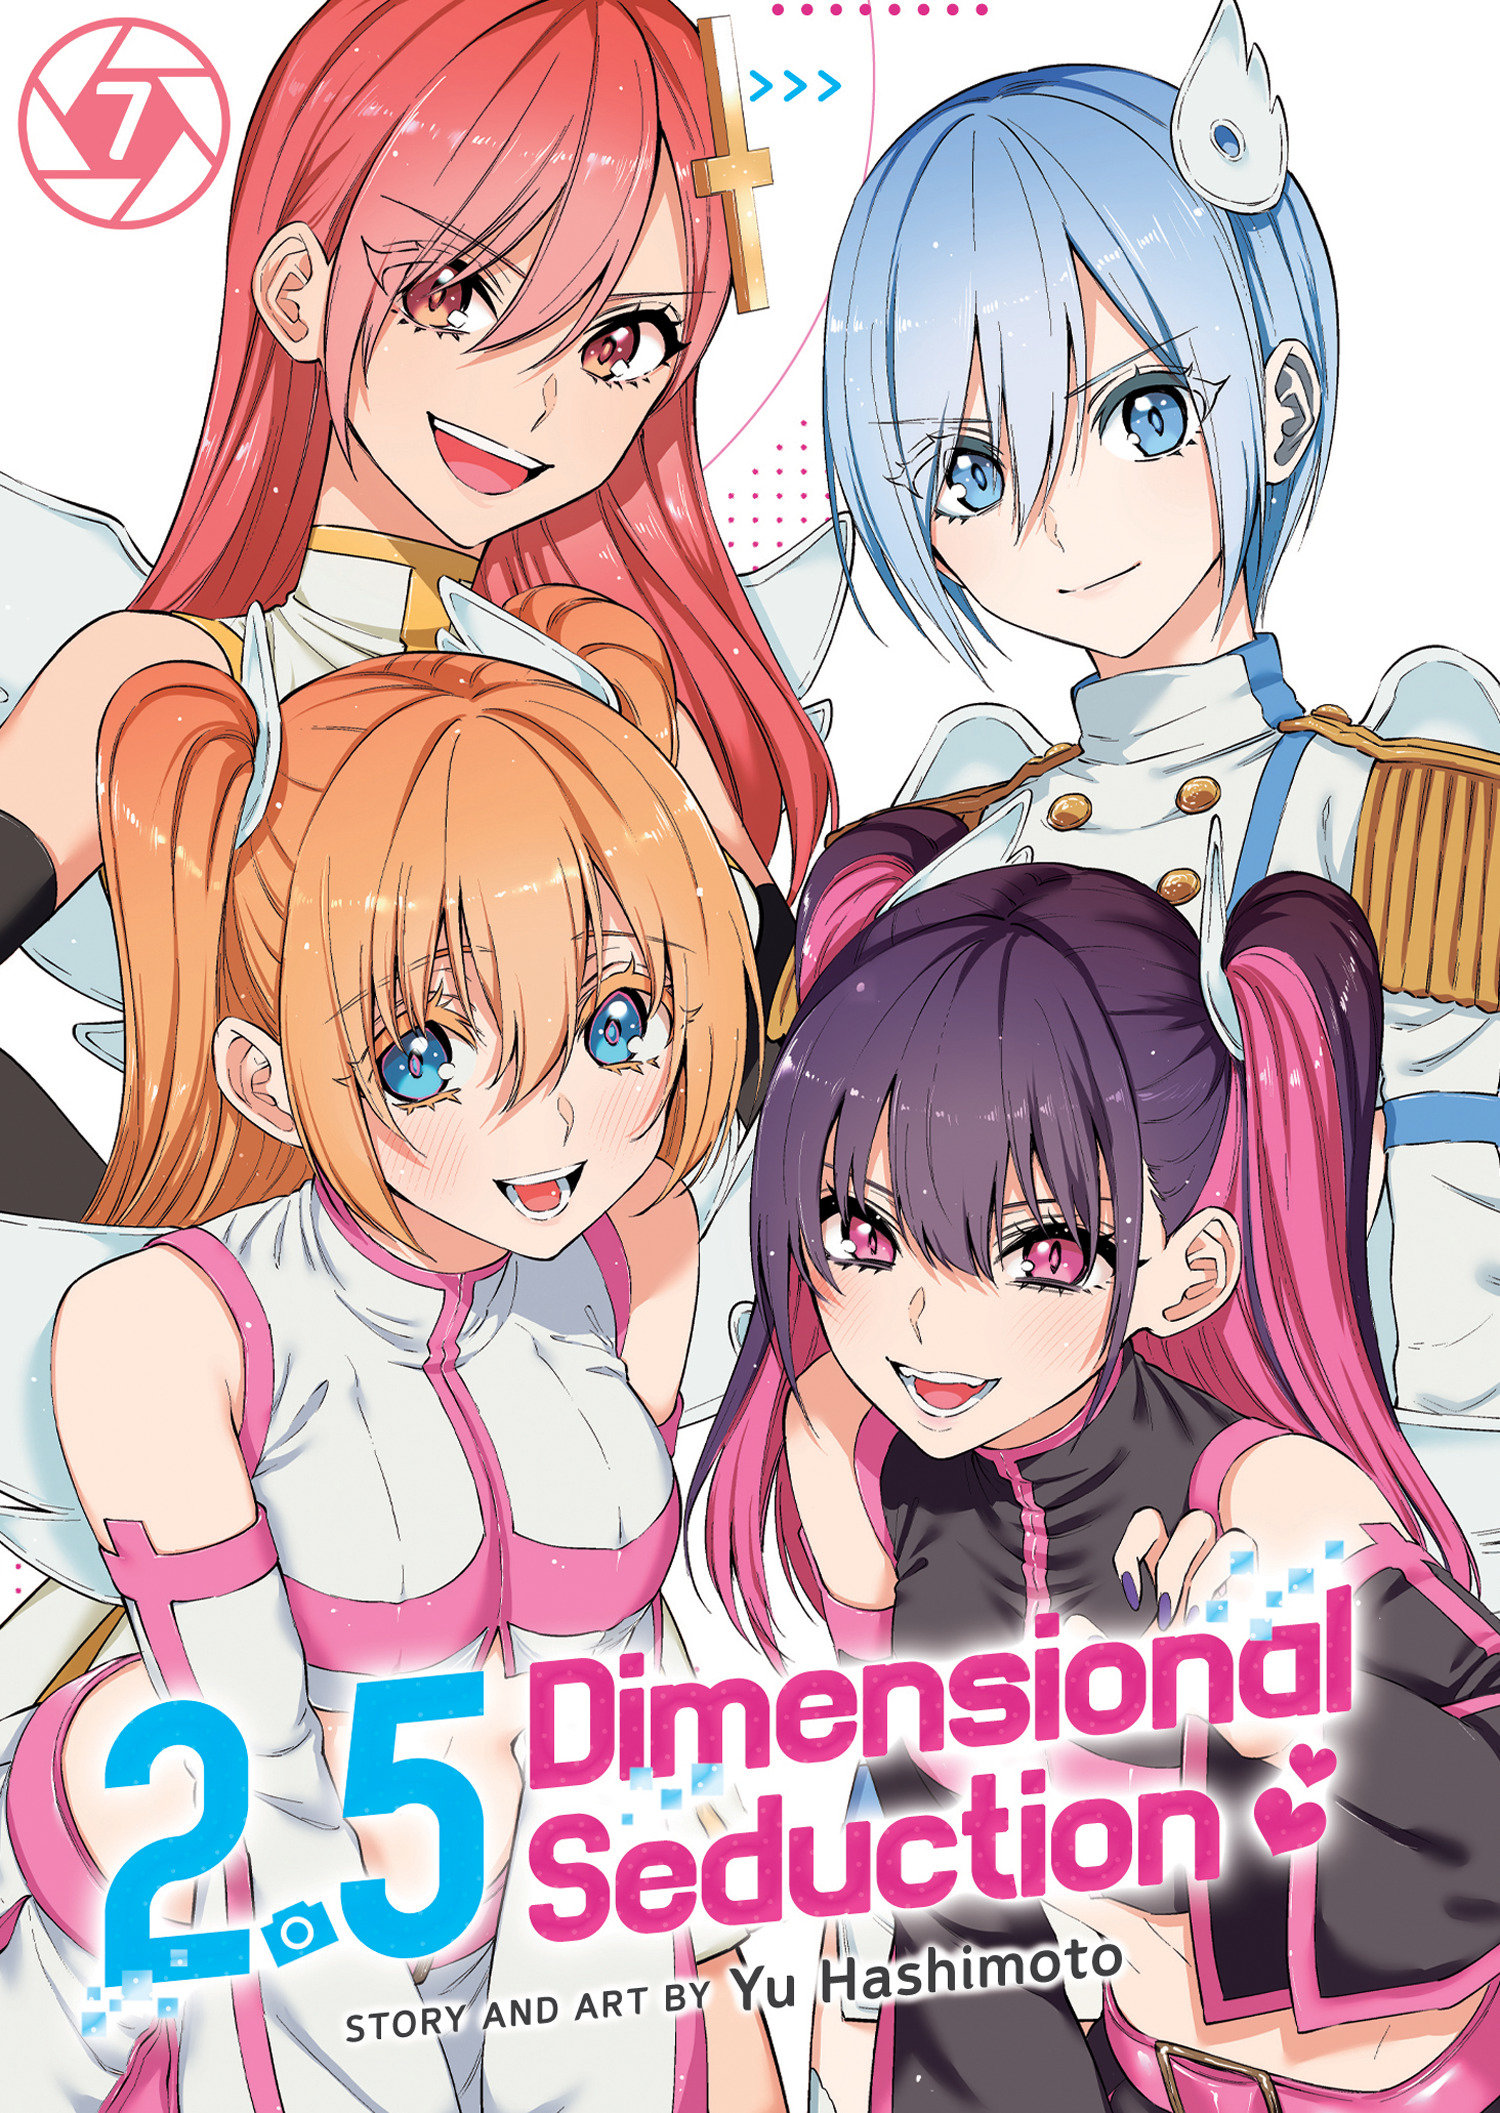 2.5 Dimensional Seduction Manga Volume 7